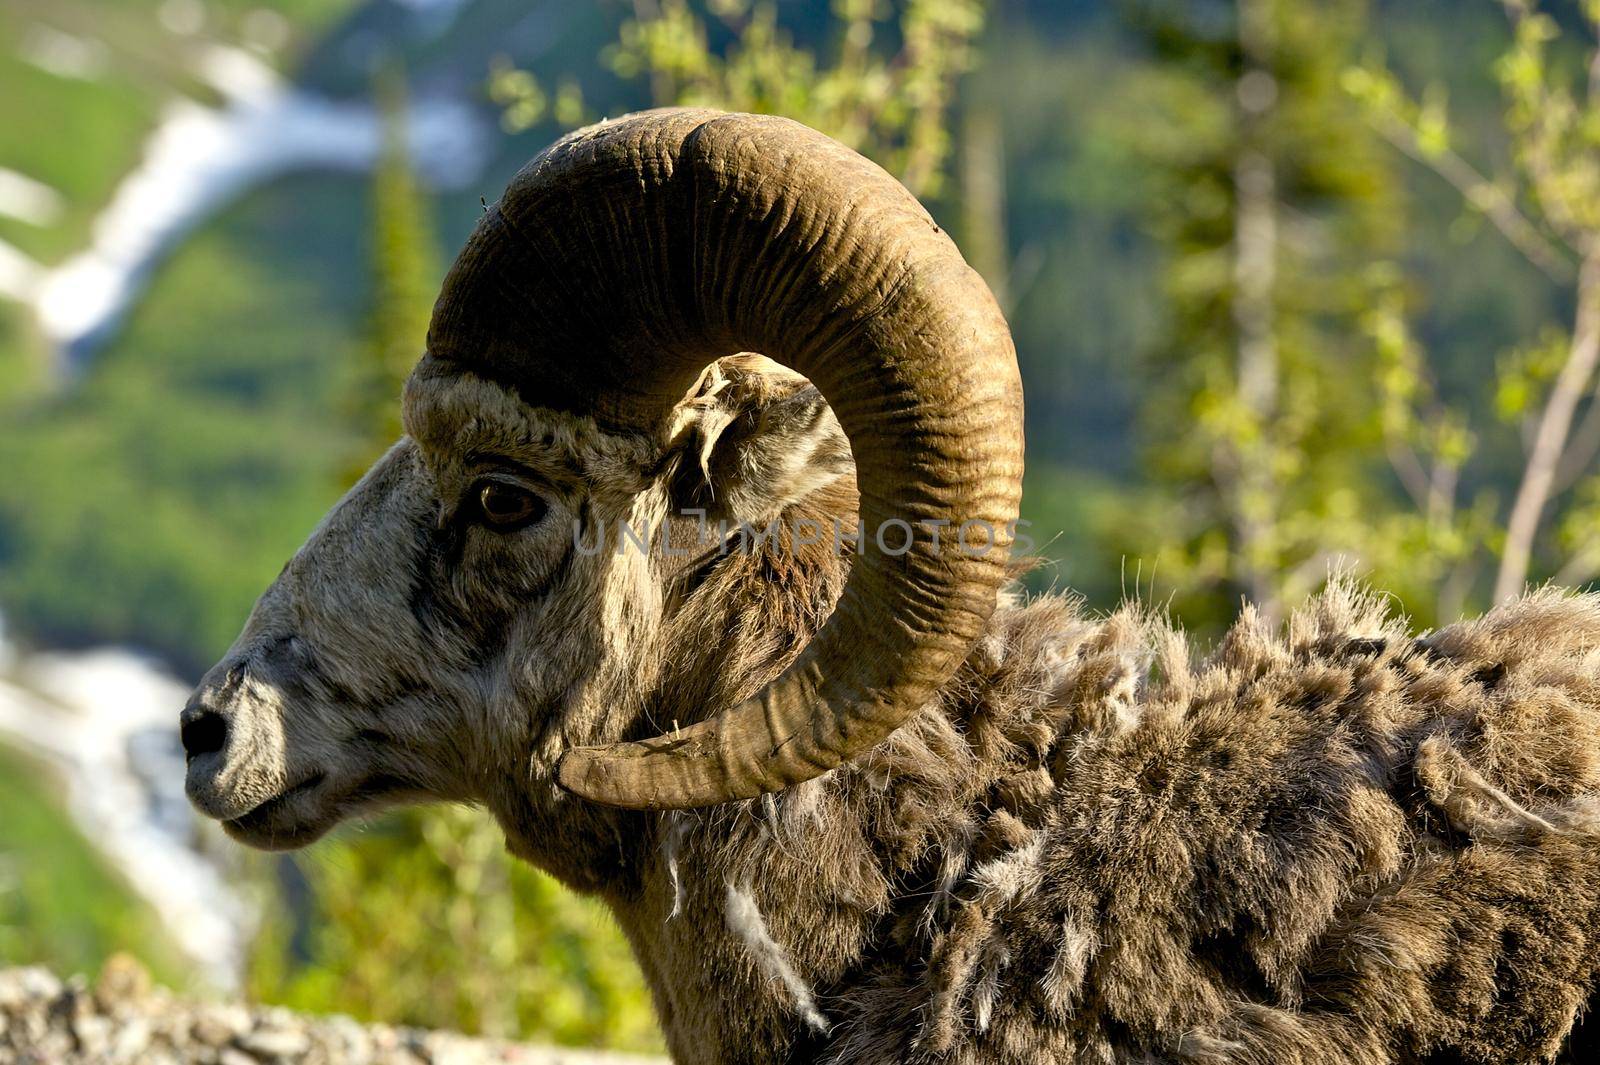 Bighorn Headshot - Montana Bighorn Sheep Head Closeup. Wildlife Photography Collection. by welcomia